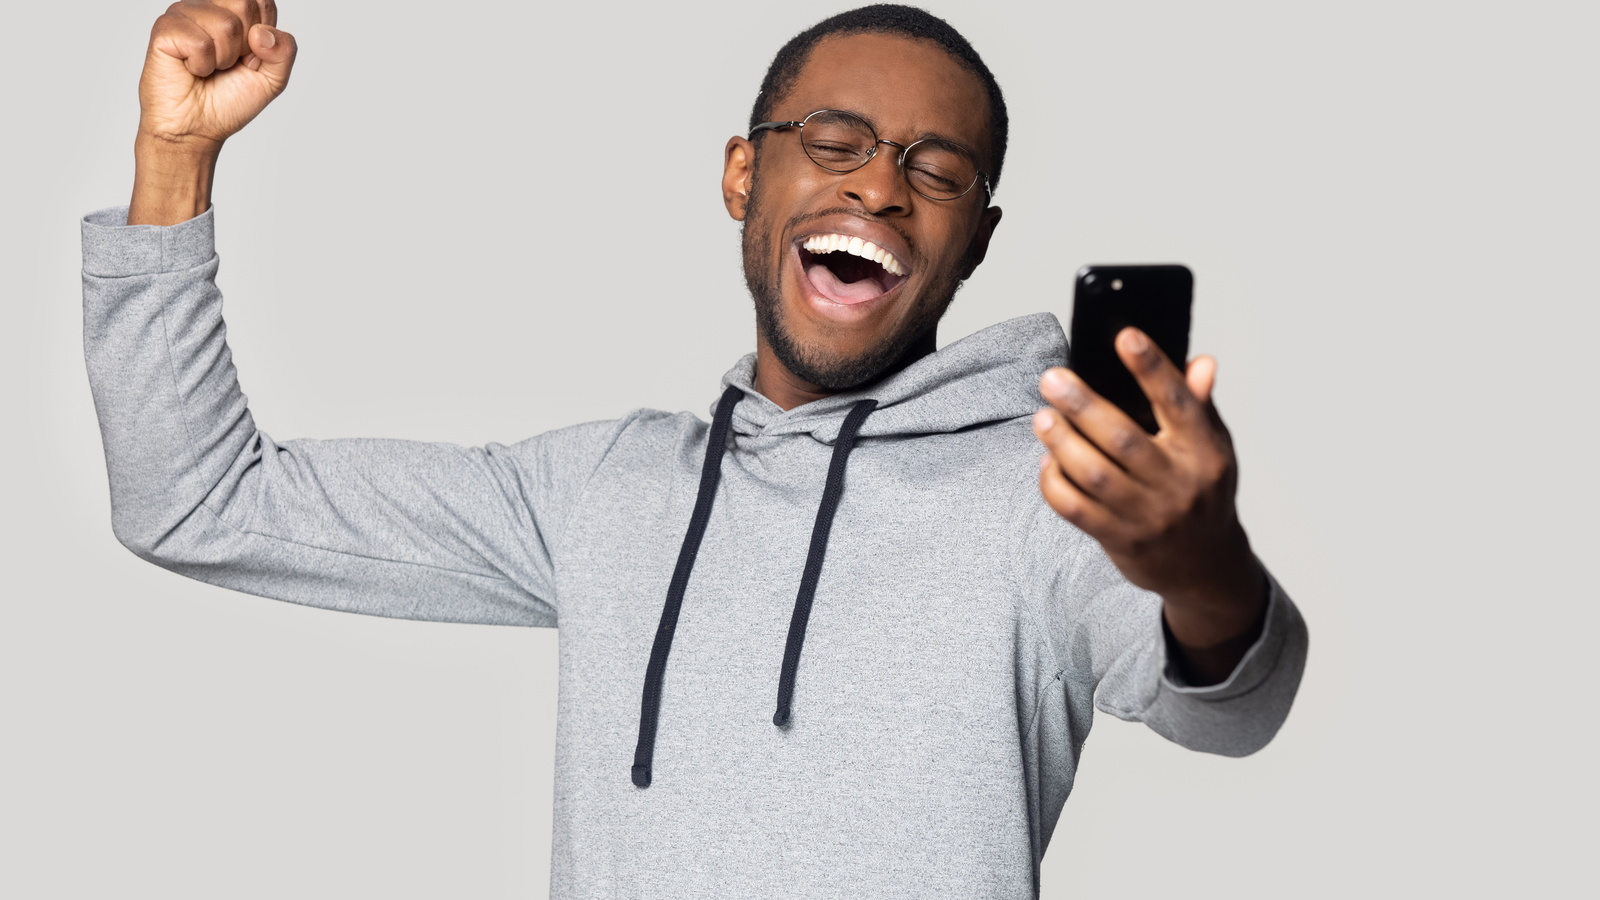 Head shot overjoyed happy millennial black man holding smartphone